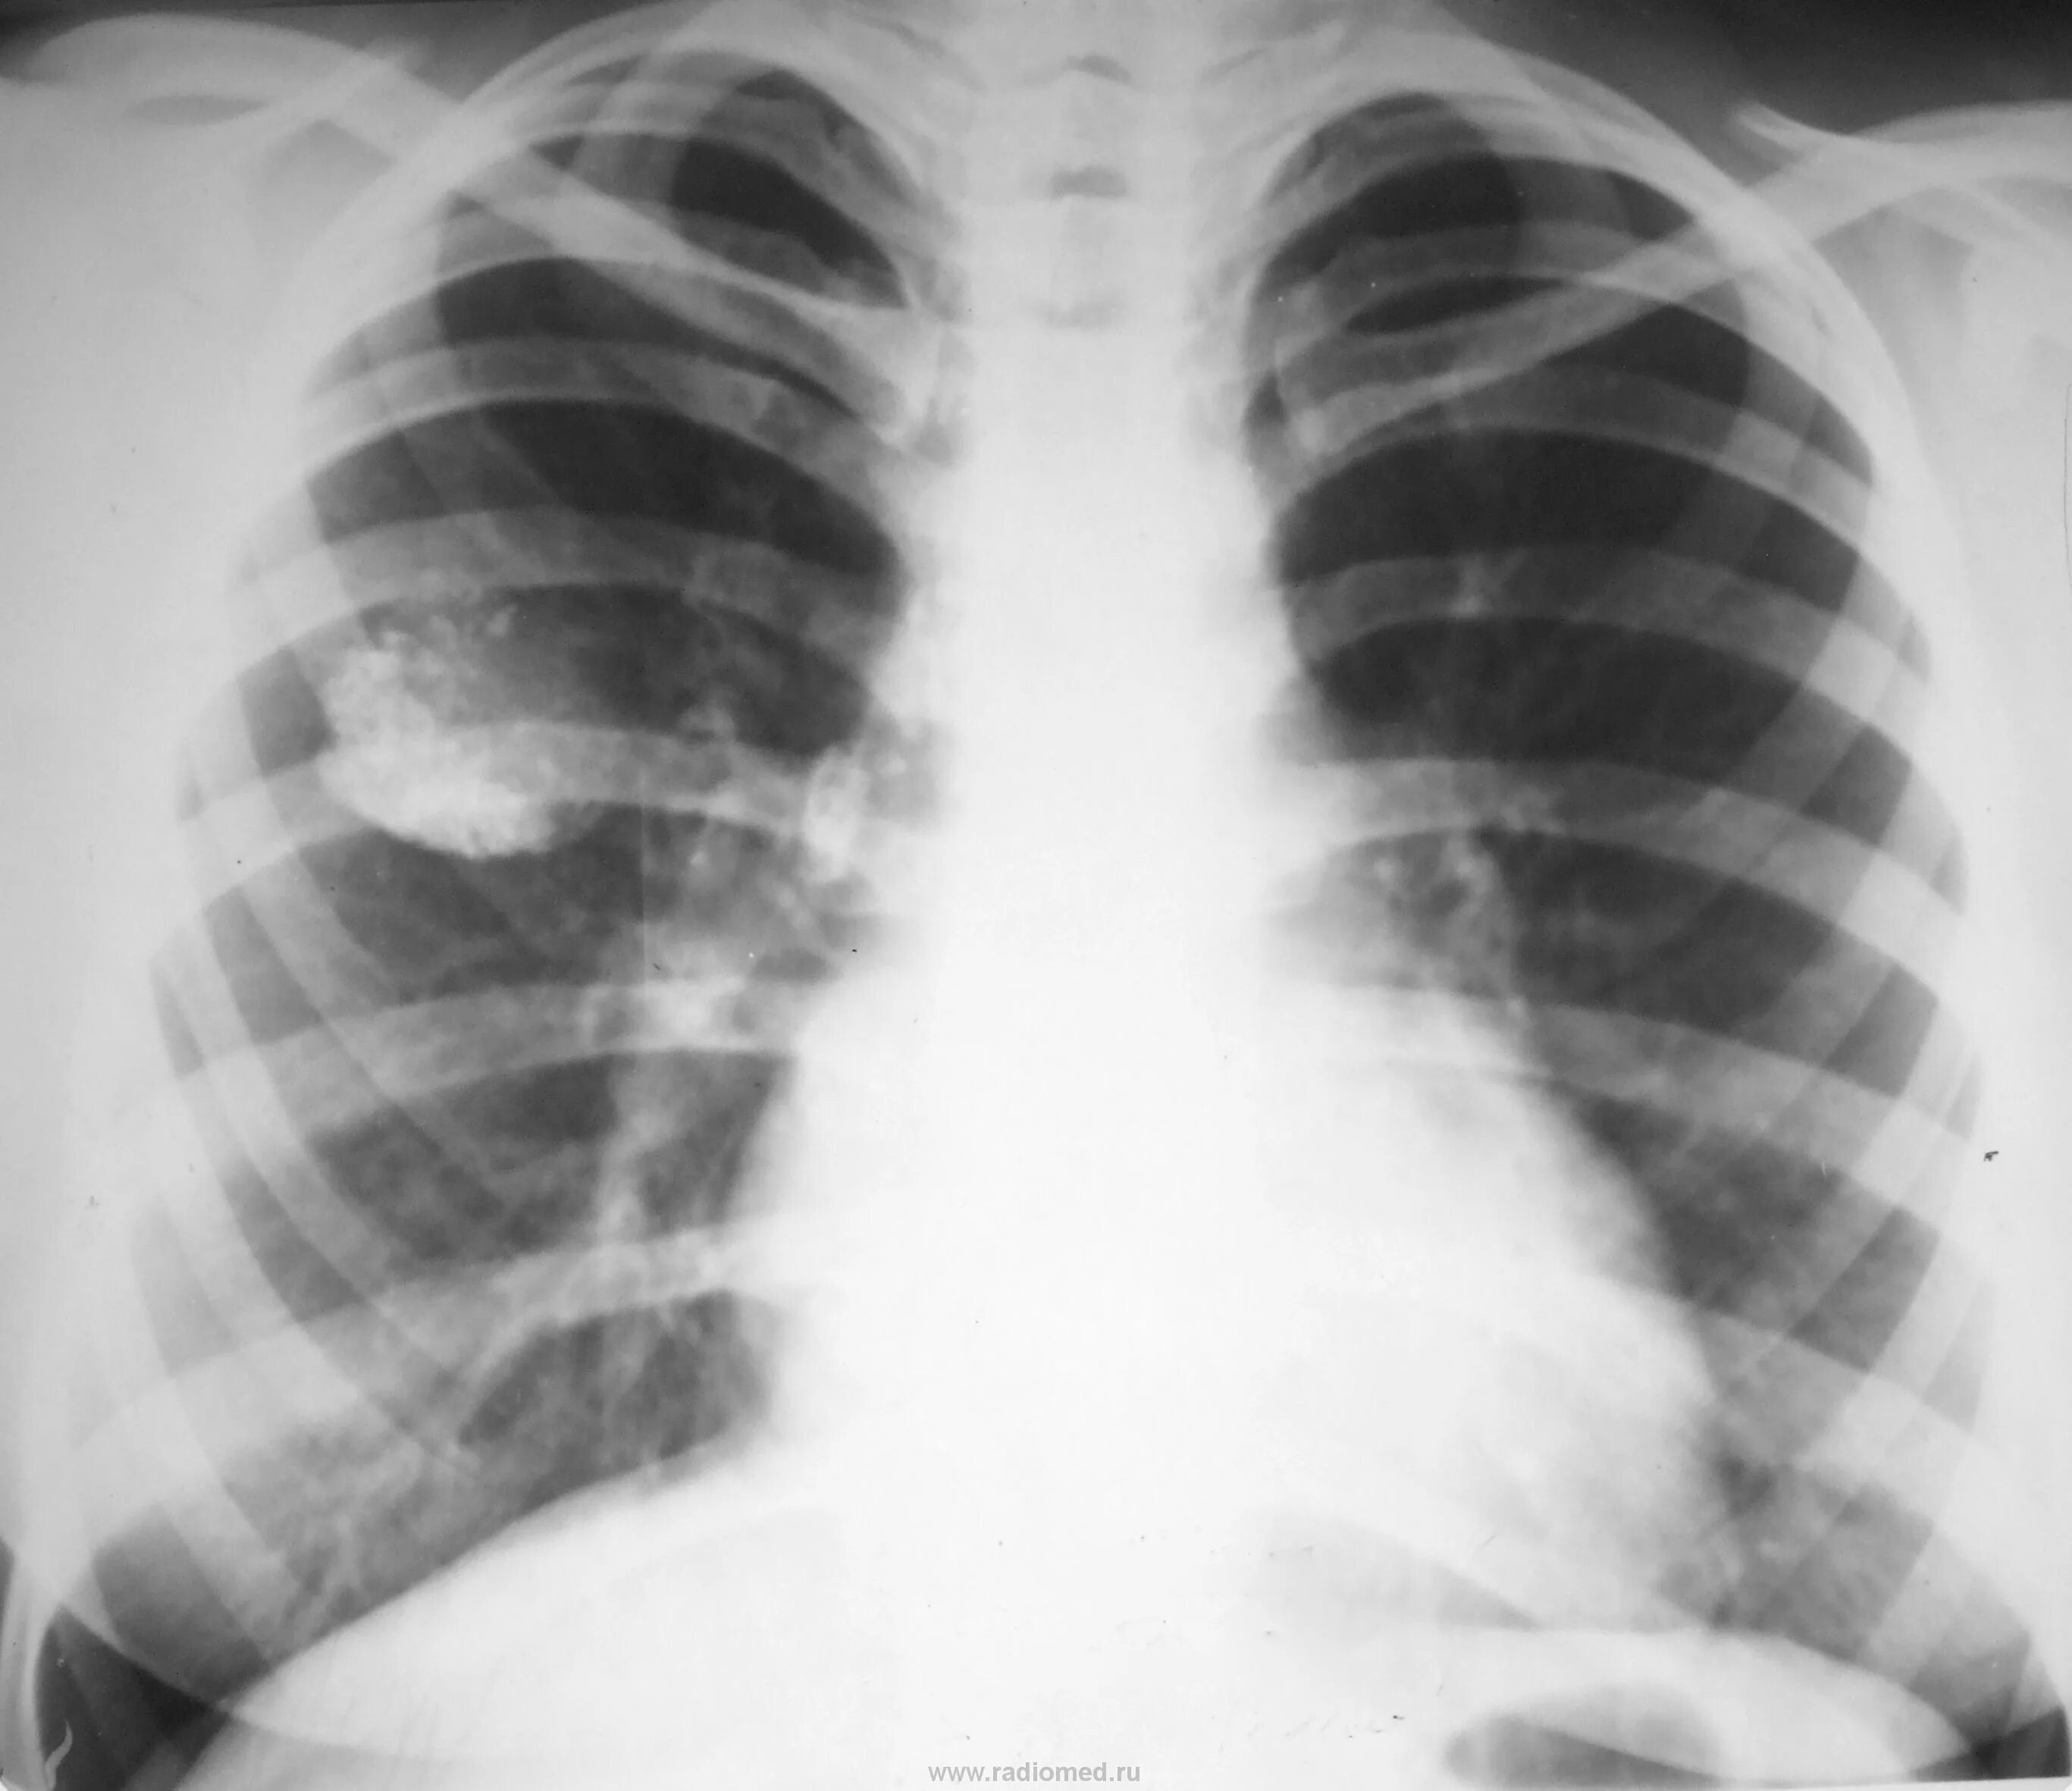 Туберкулез молочной. ПТК на рентгенограмме. Первичный туберкулезный комплекс в фазе кальцинации.